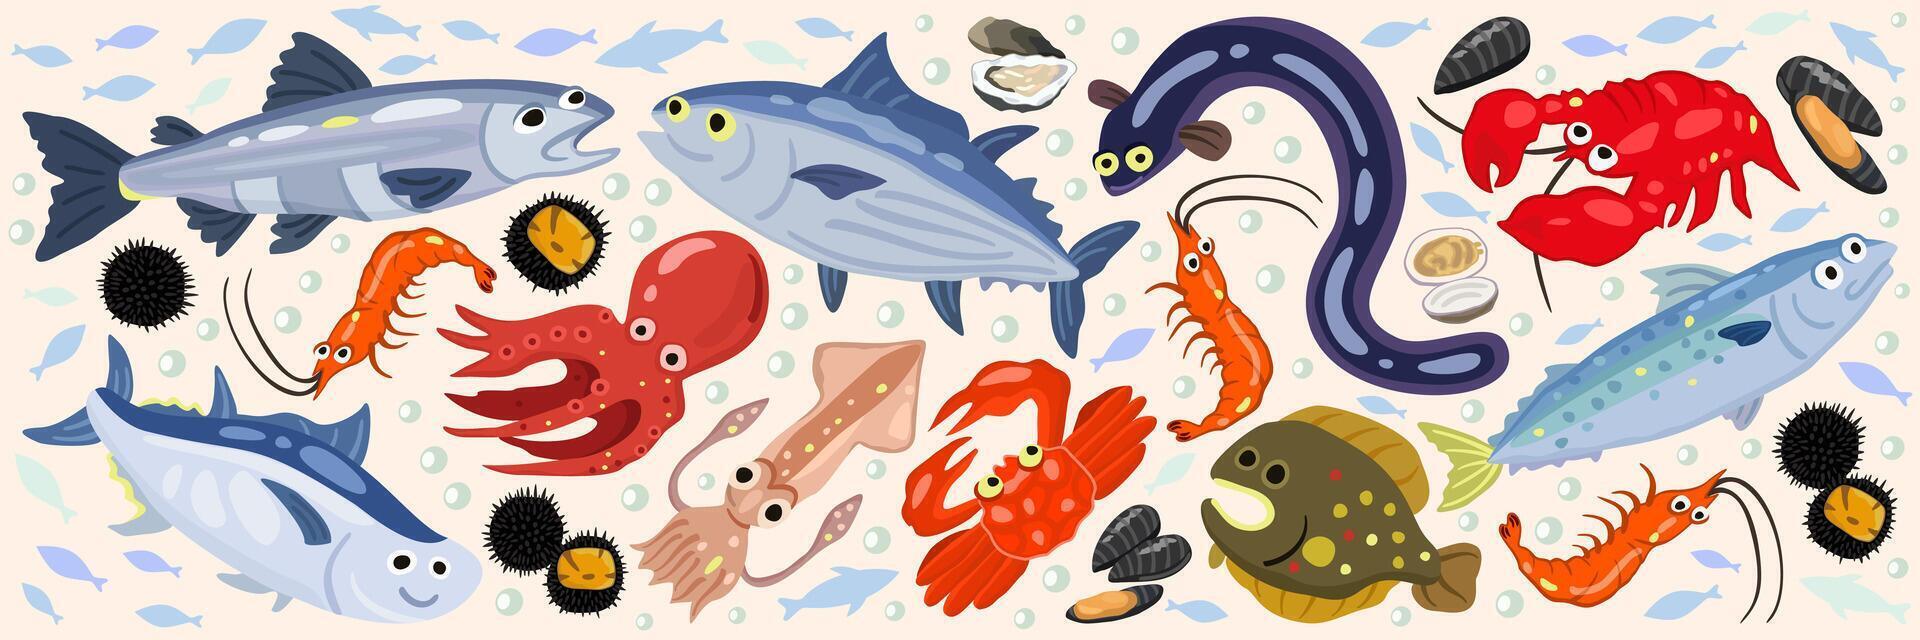 vector linda conjunto de marina animales salmón, bonito, agua dulce Anguila, atún, pulpo, caballa, calamar, platija, camarones, cangrejo, langosta